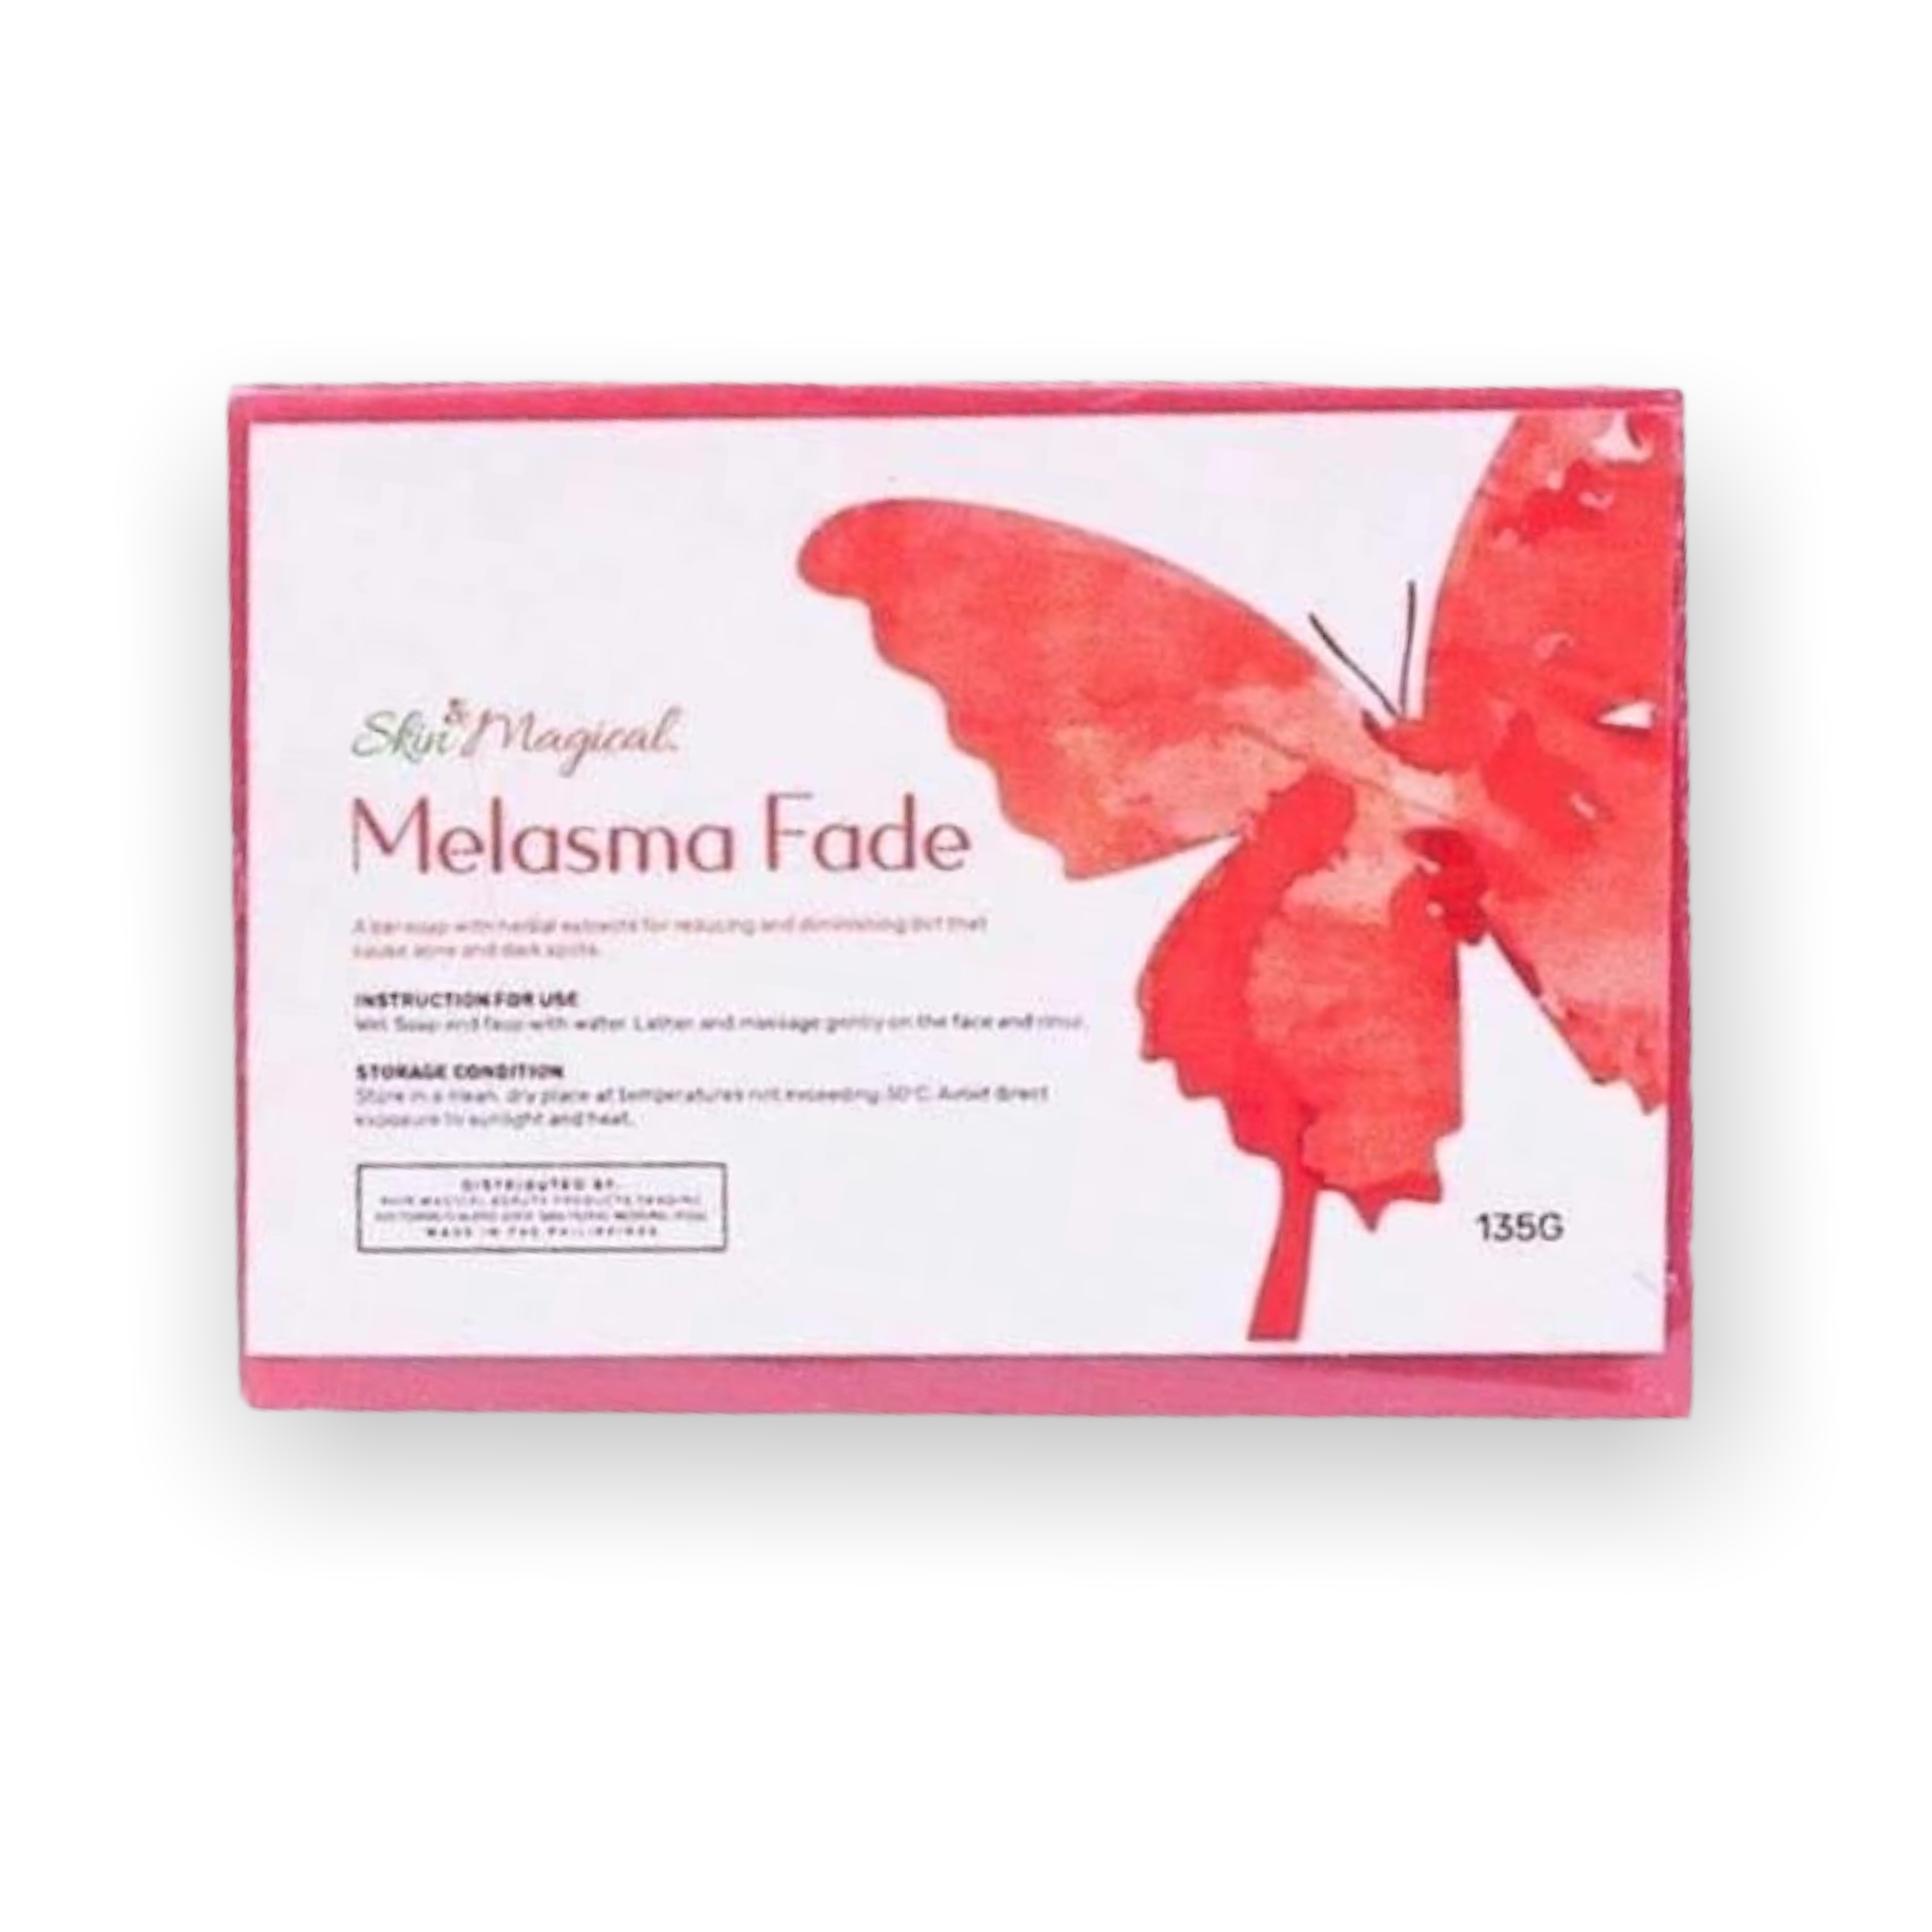 Skin magical Melasma fade soap 150g